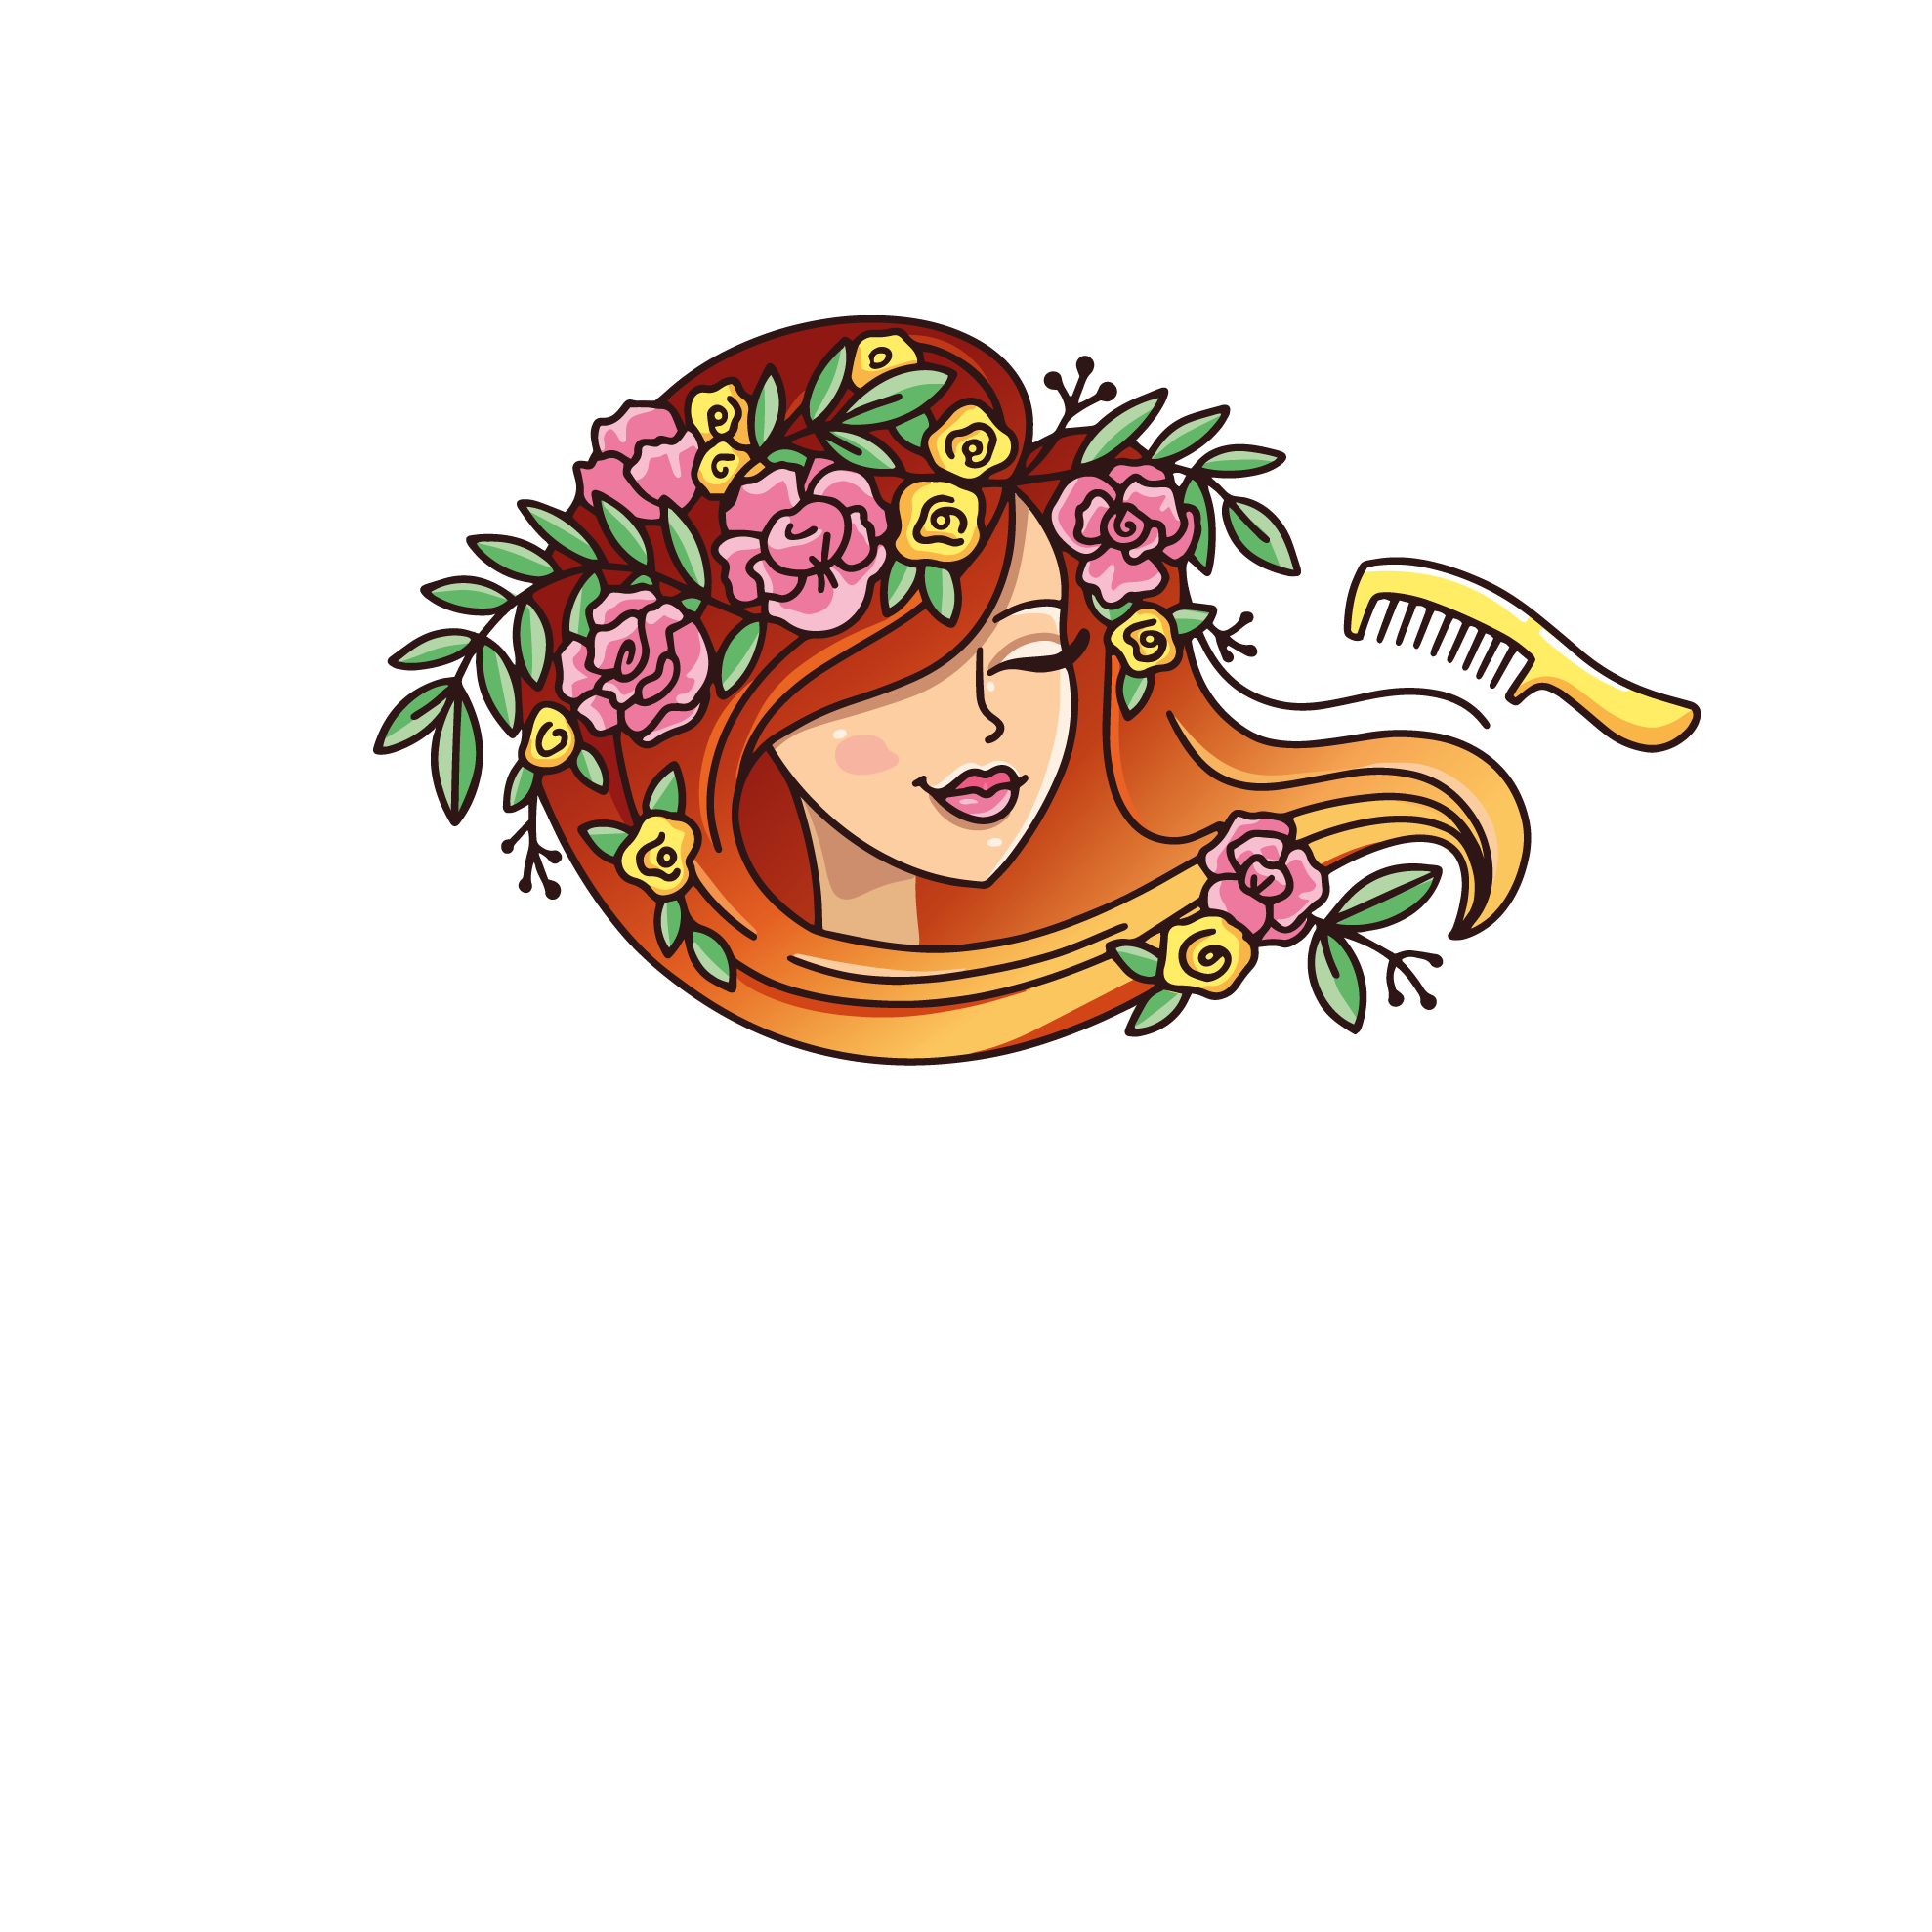  Салон красоты "VESNA" 